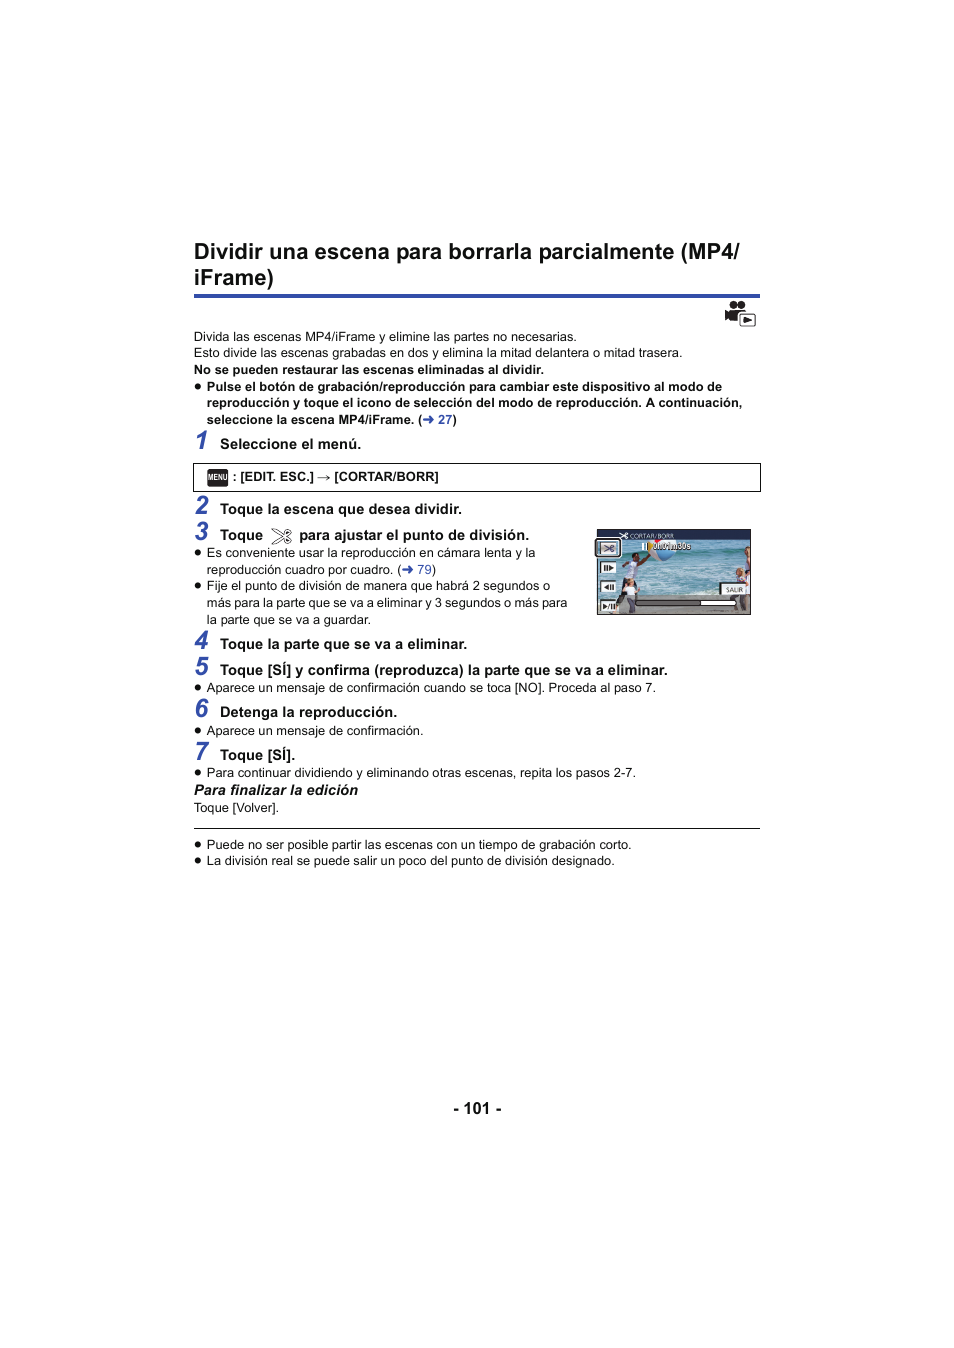 Panasonic HCV250EC Manual del usuario | Página 101 / 214